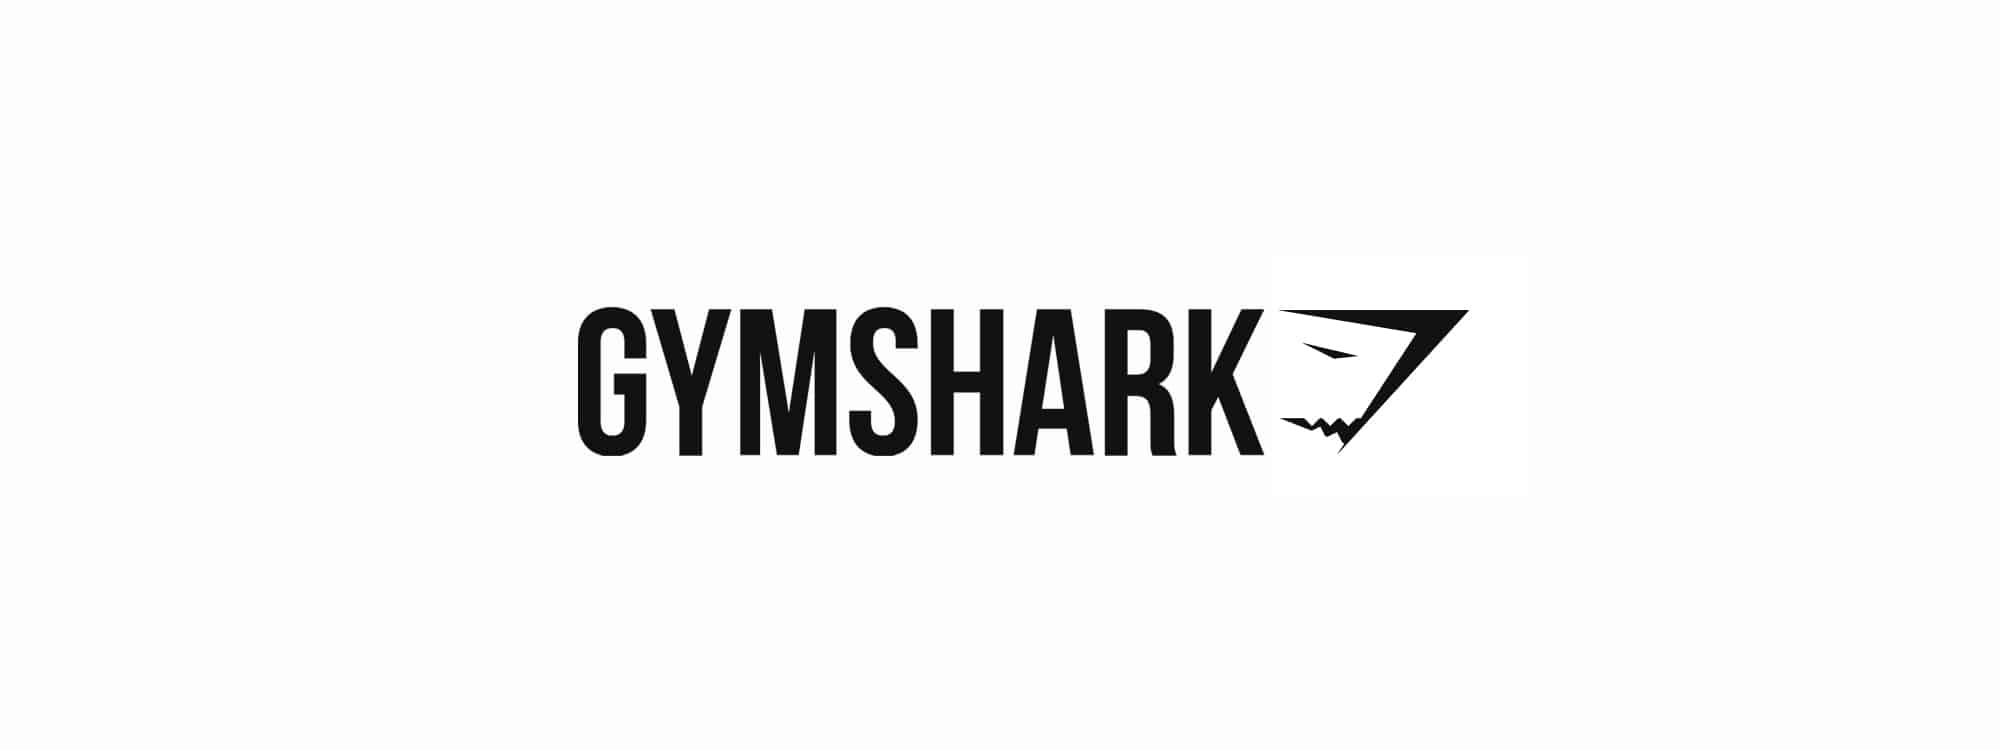 Gymshark Logo Design By Martin Williams At Pixel Freak Creative